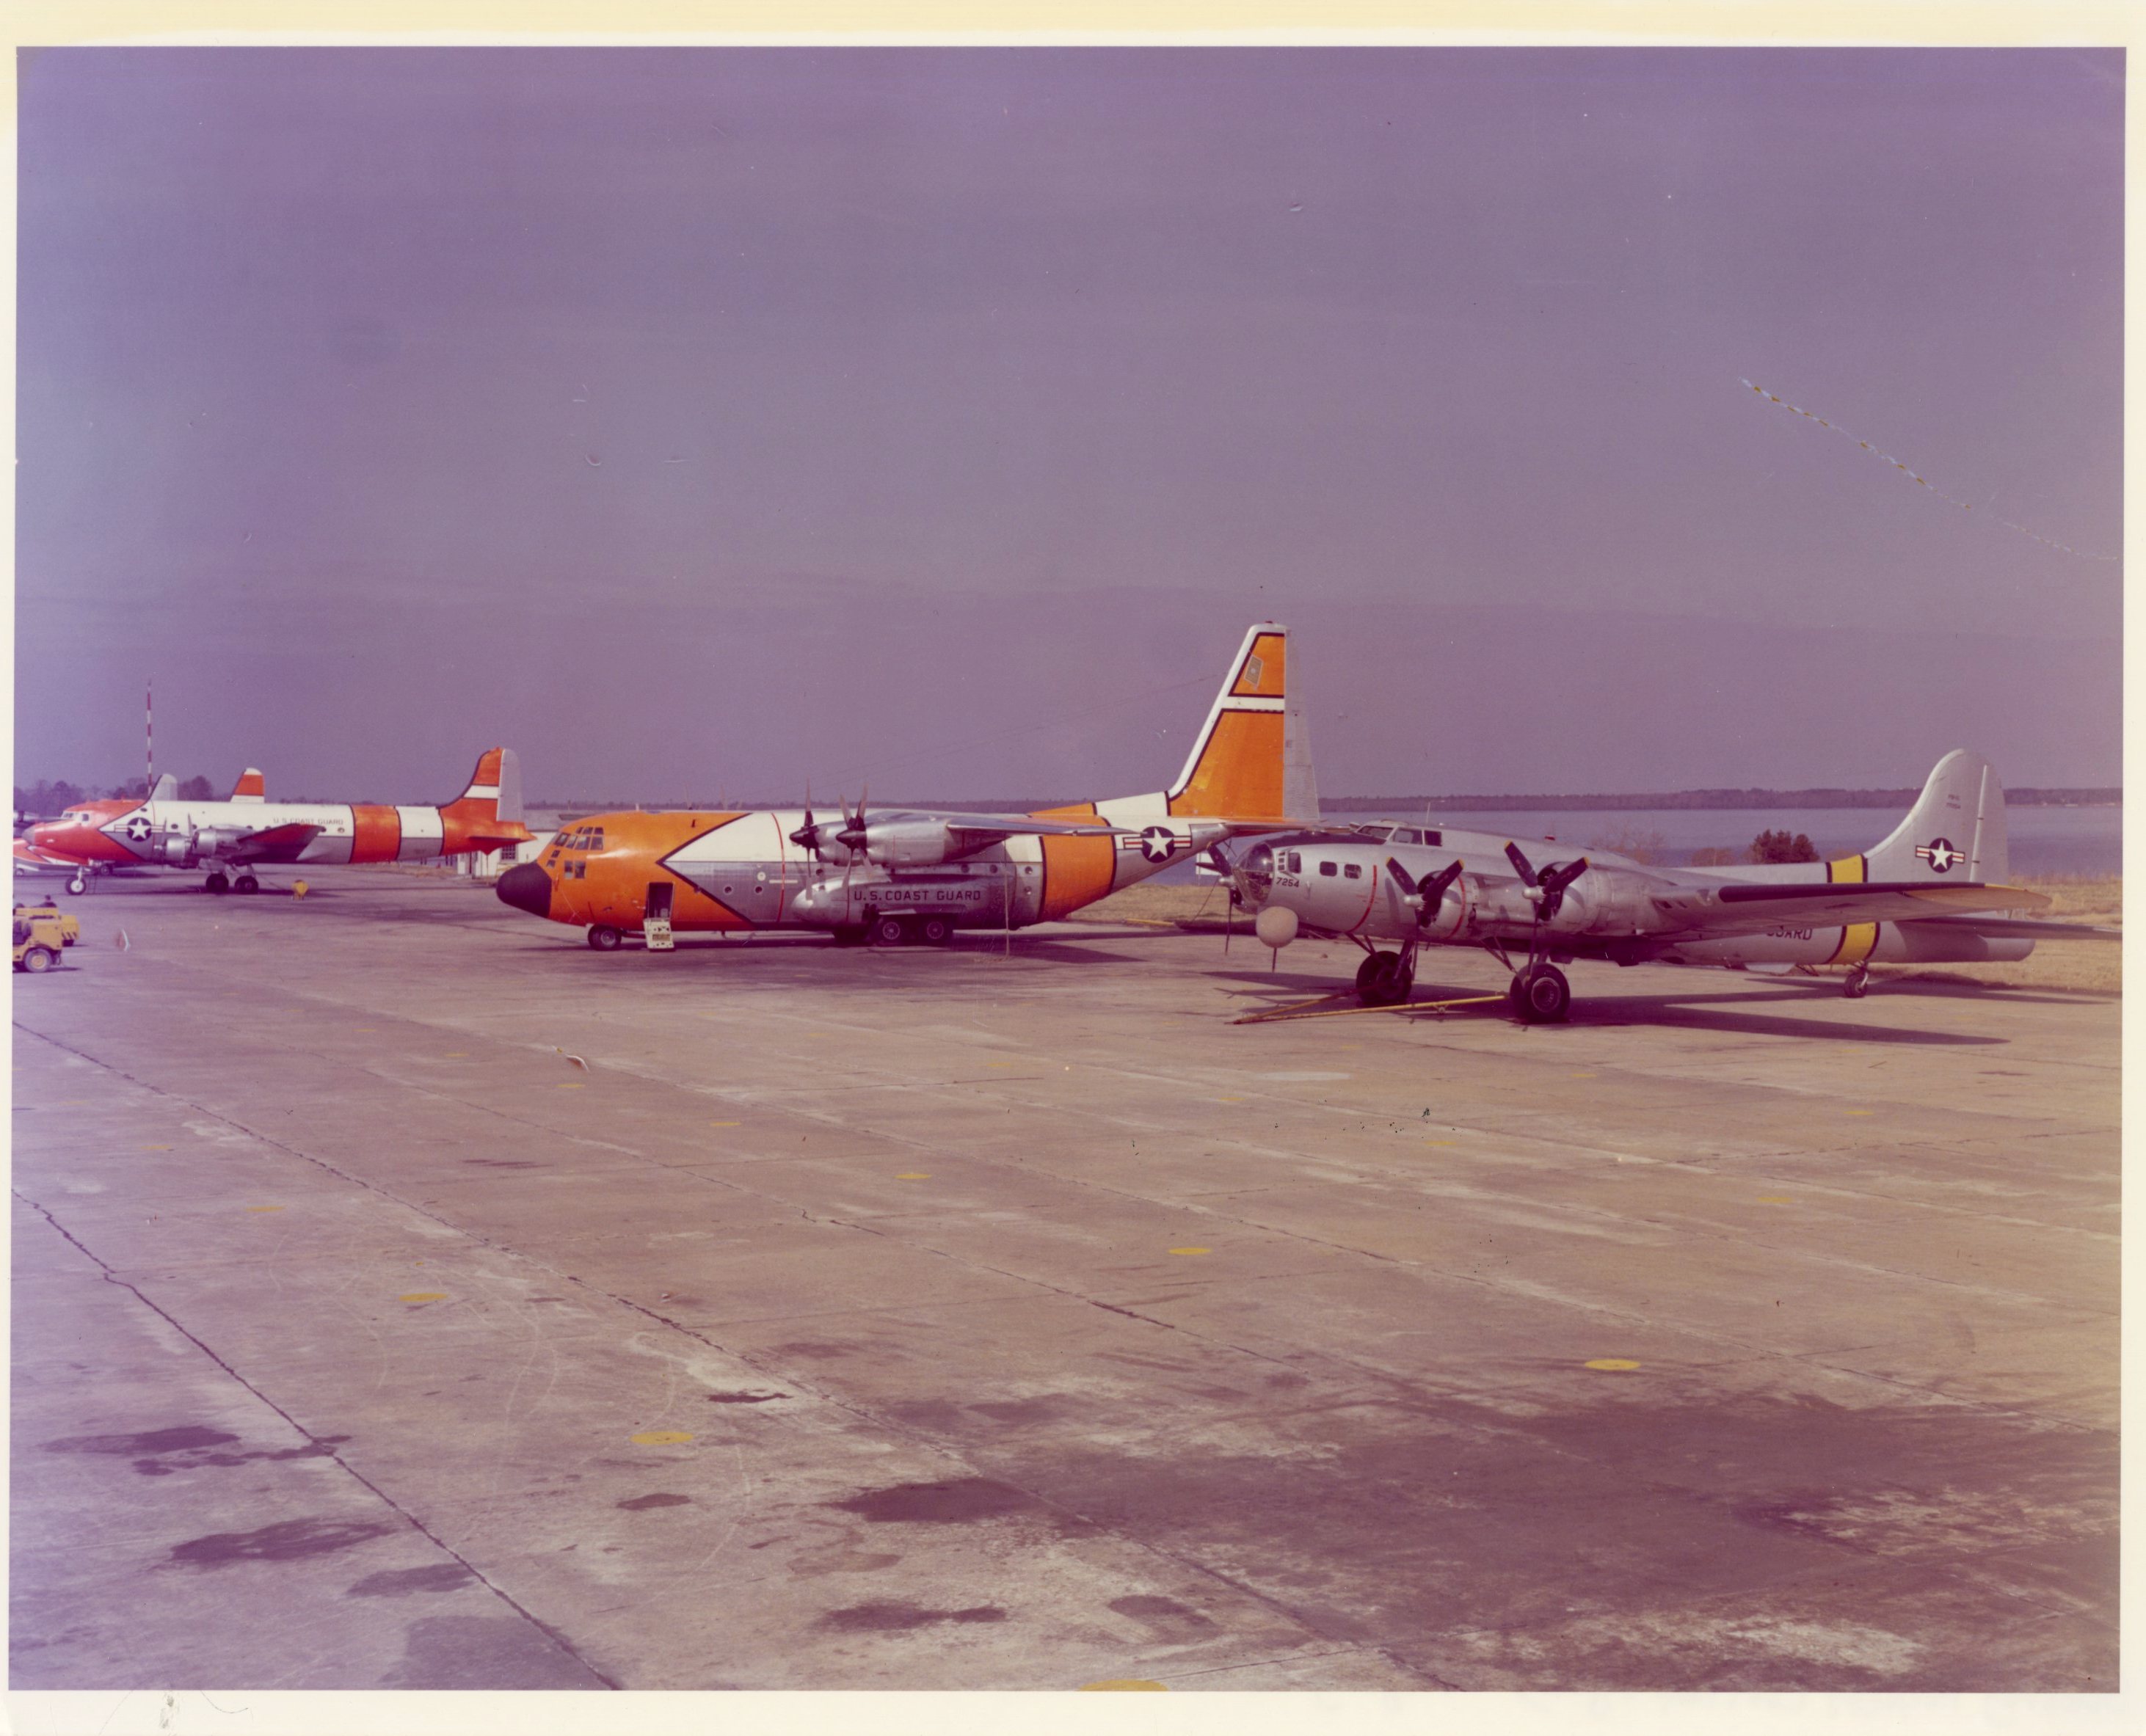 International C-130 1962 #8